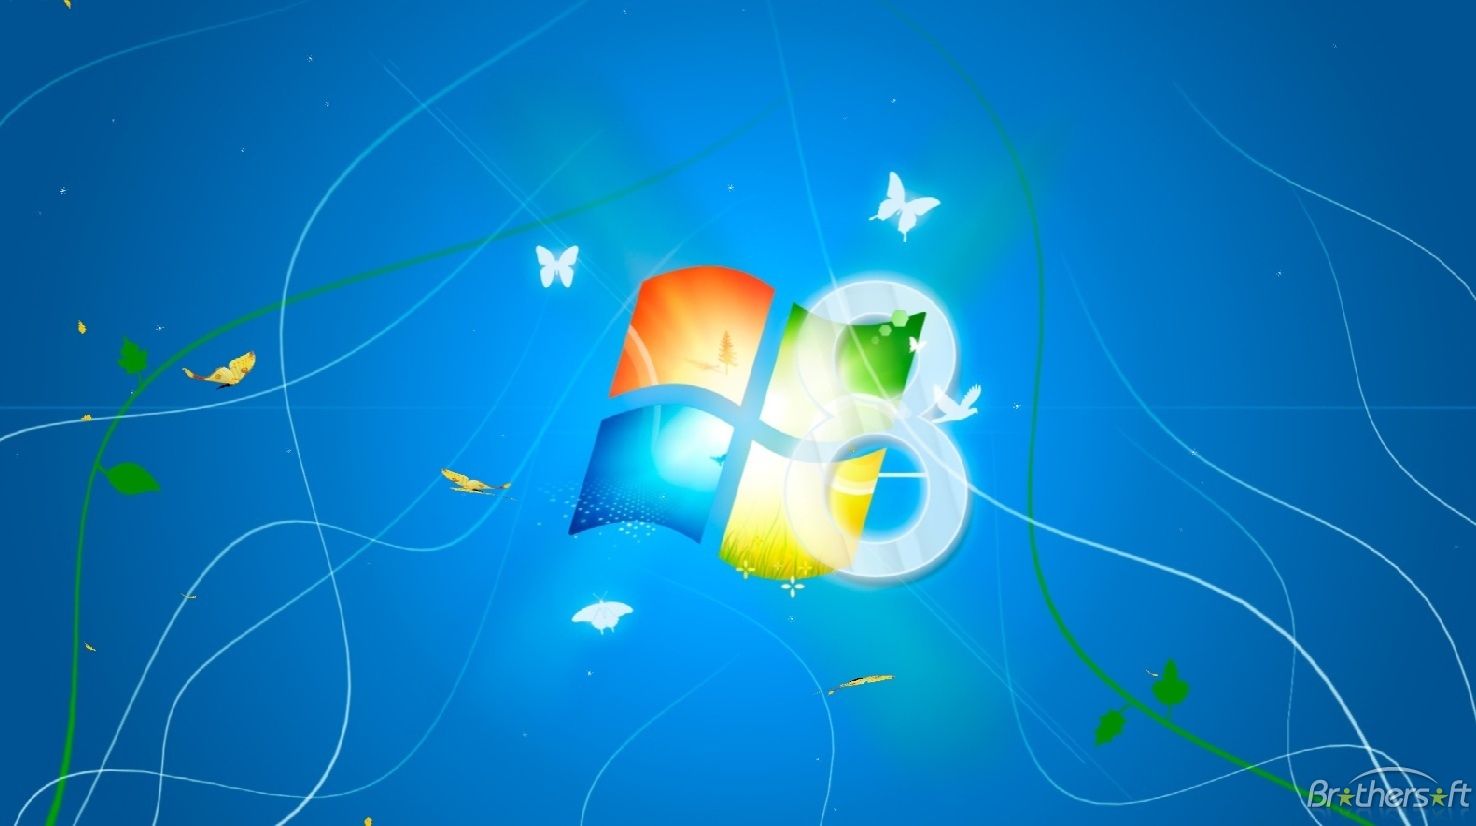 Windows 8 Animated Wallpaper. Amazing Wallpaper Windows 1. Steampunk Wallpaper Windows 10 and Windows 1.0 Wallpaper Dinosaur